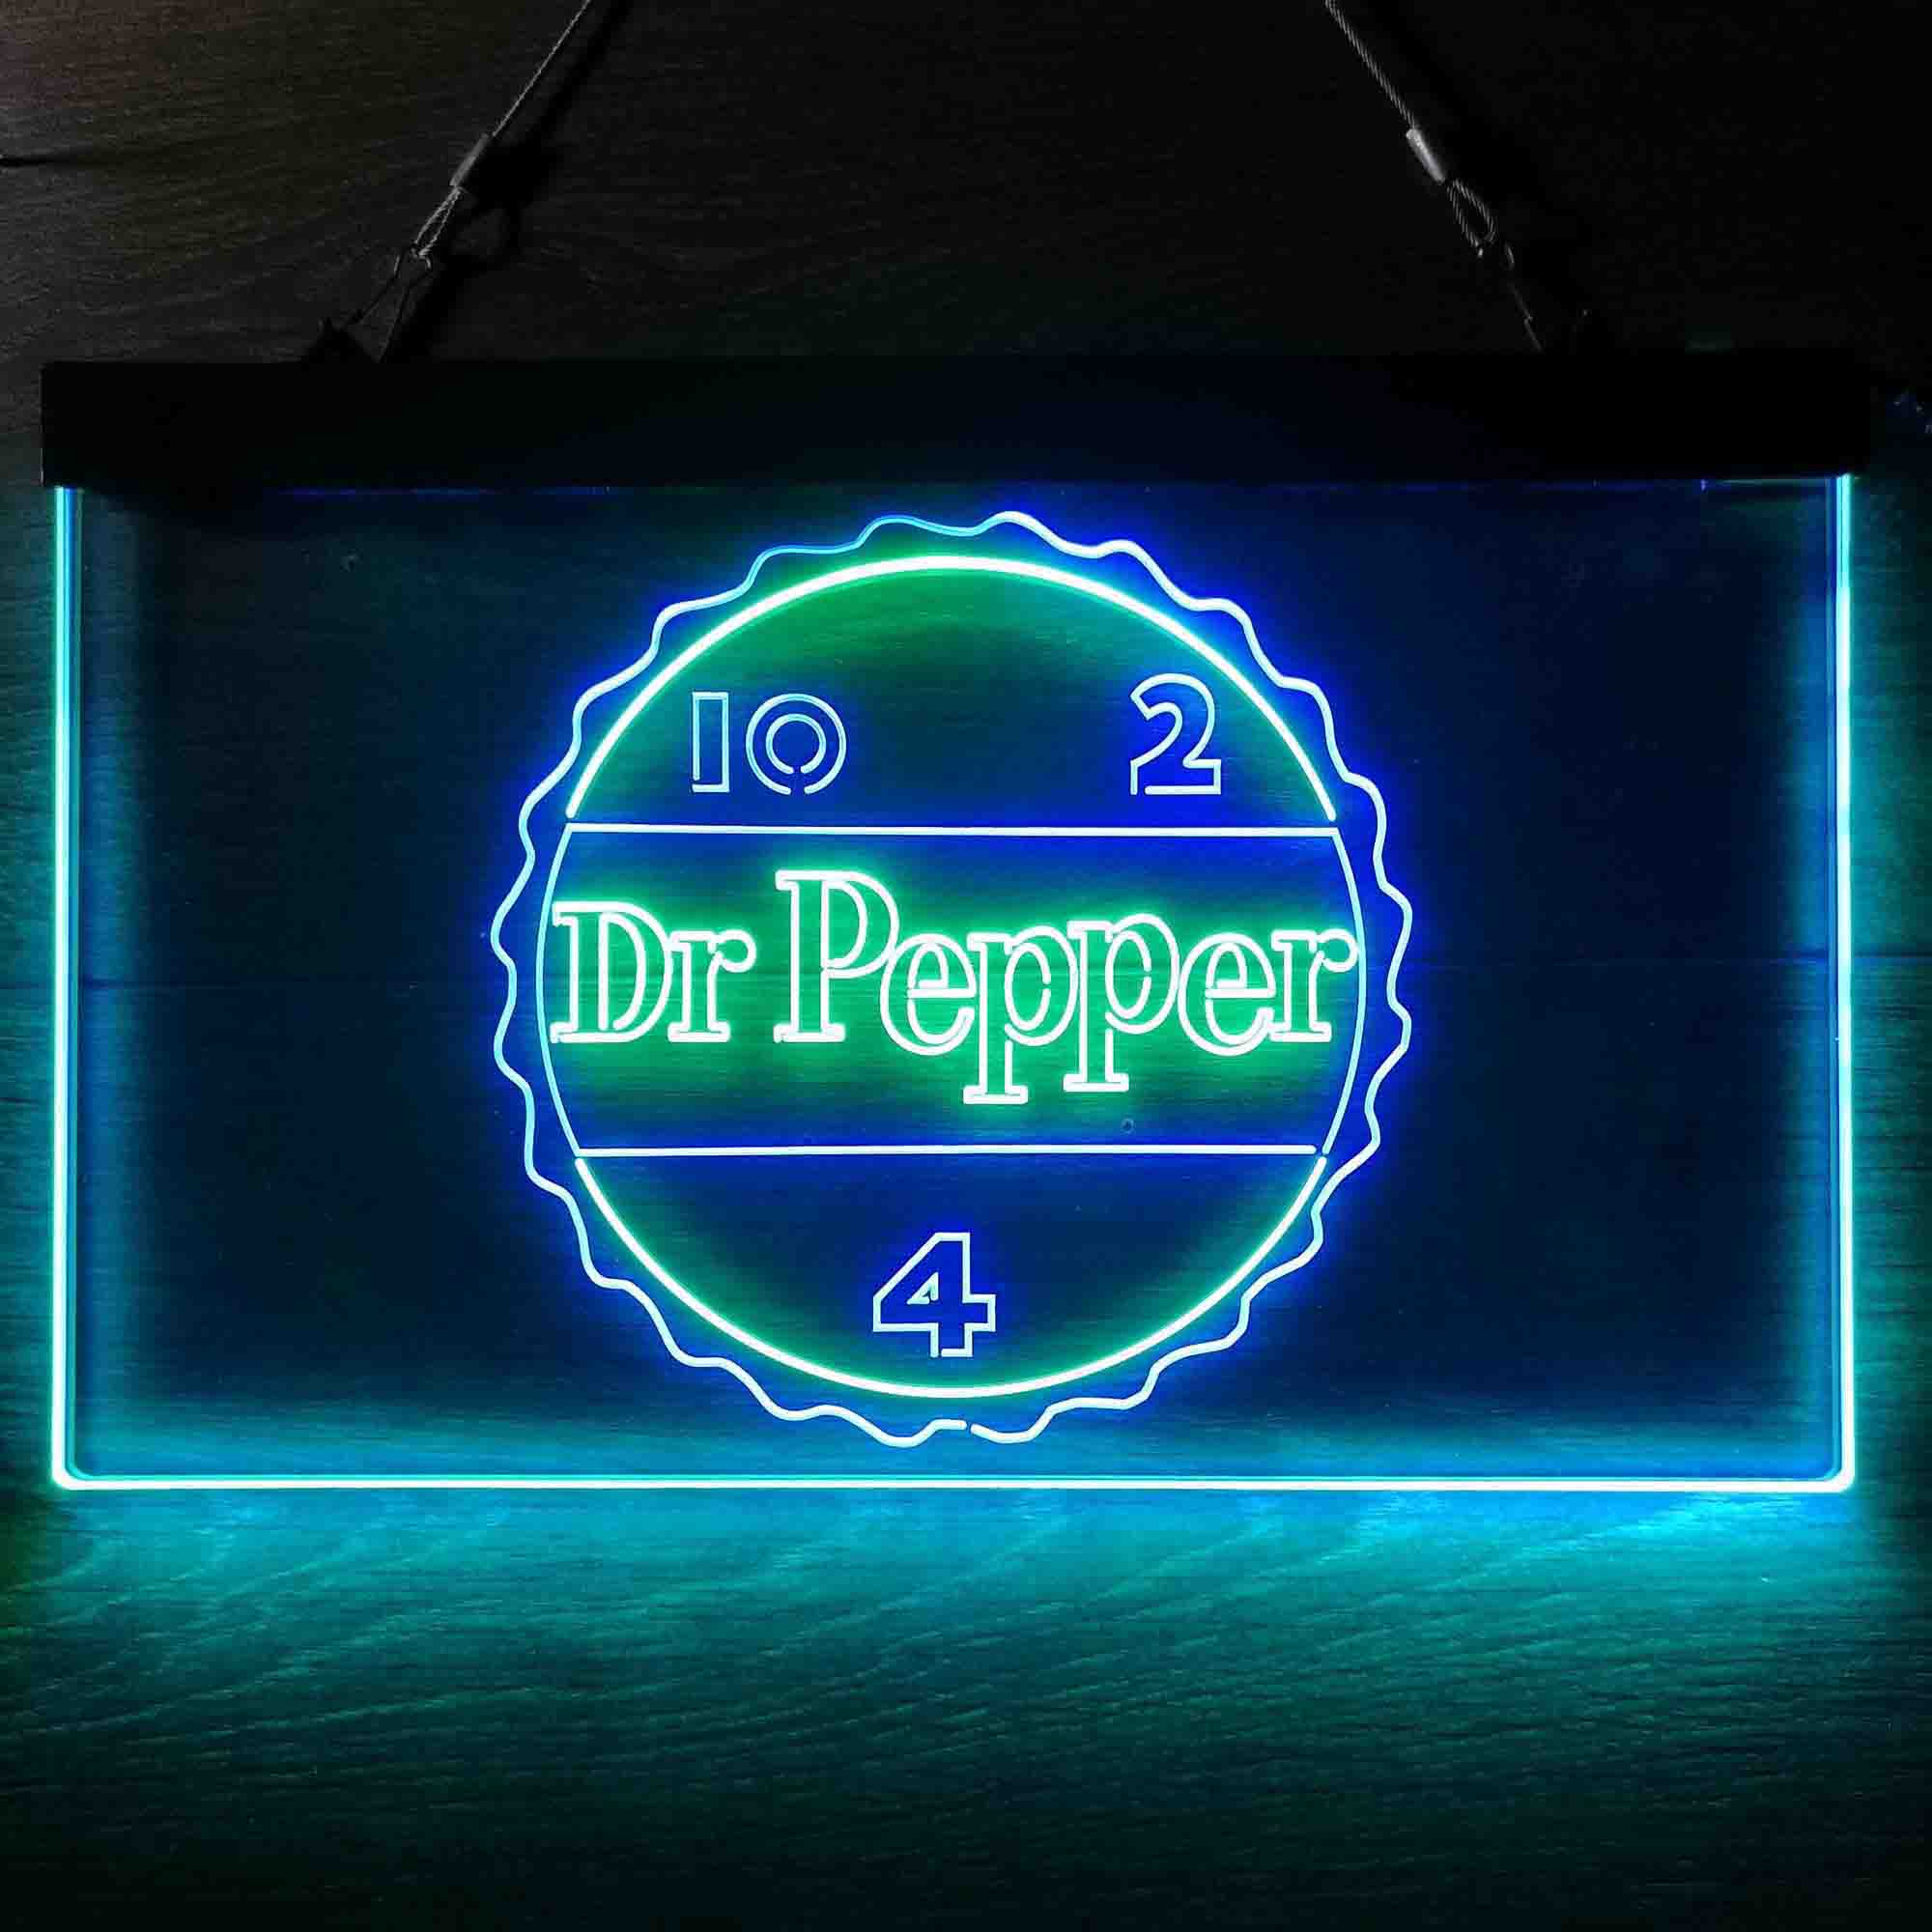 Dr Pepper 10 2 4 Drink Neon-Like LED Sign